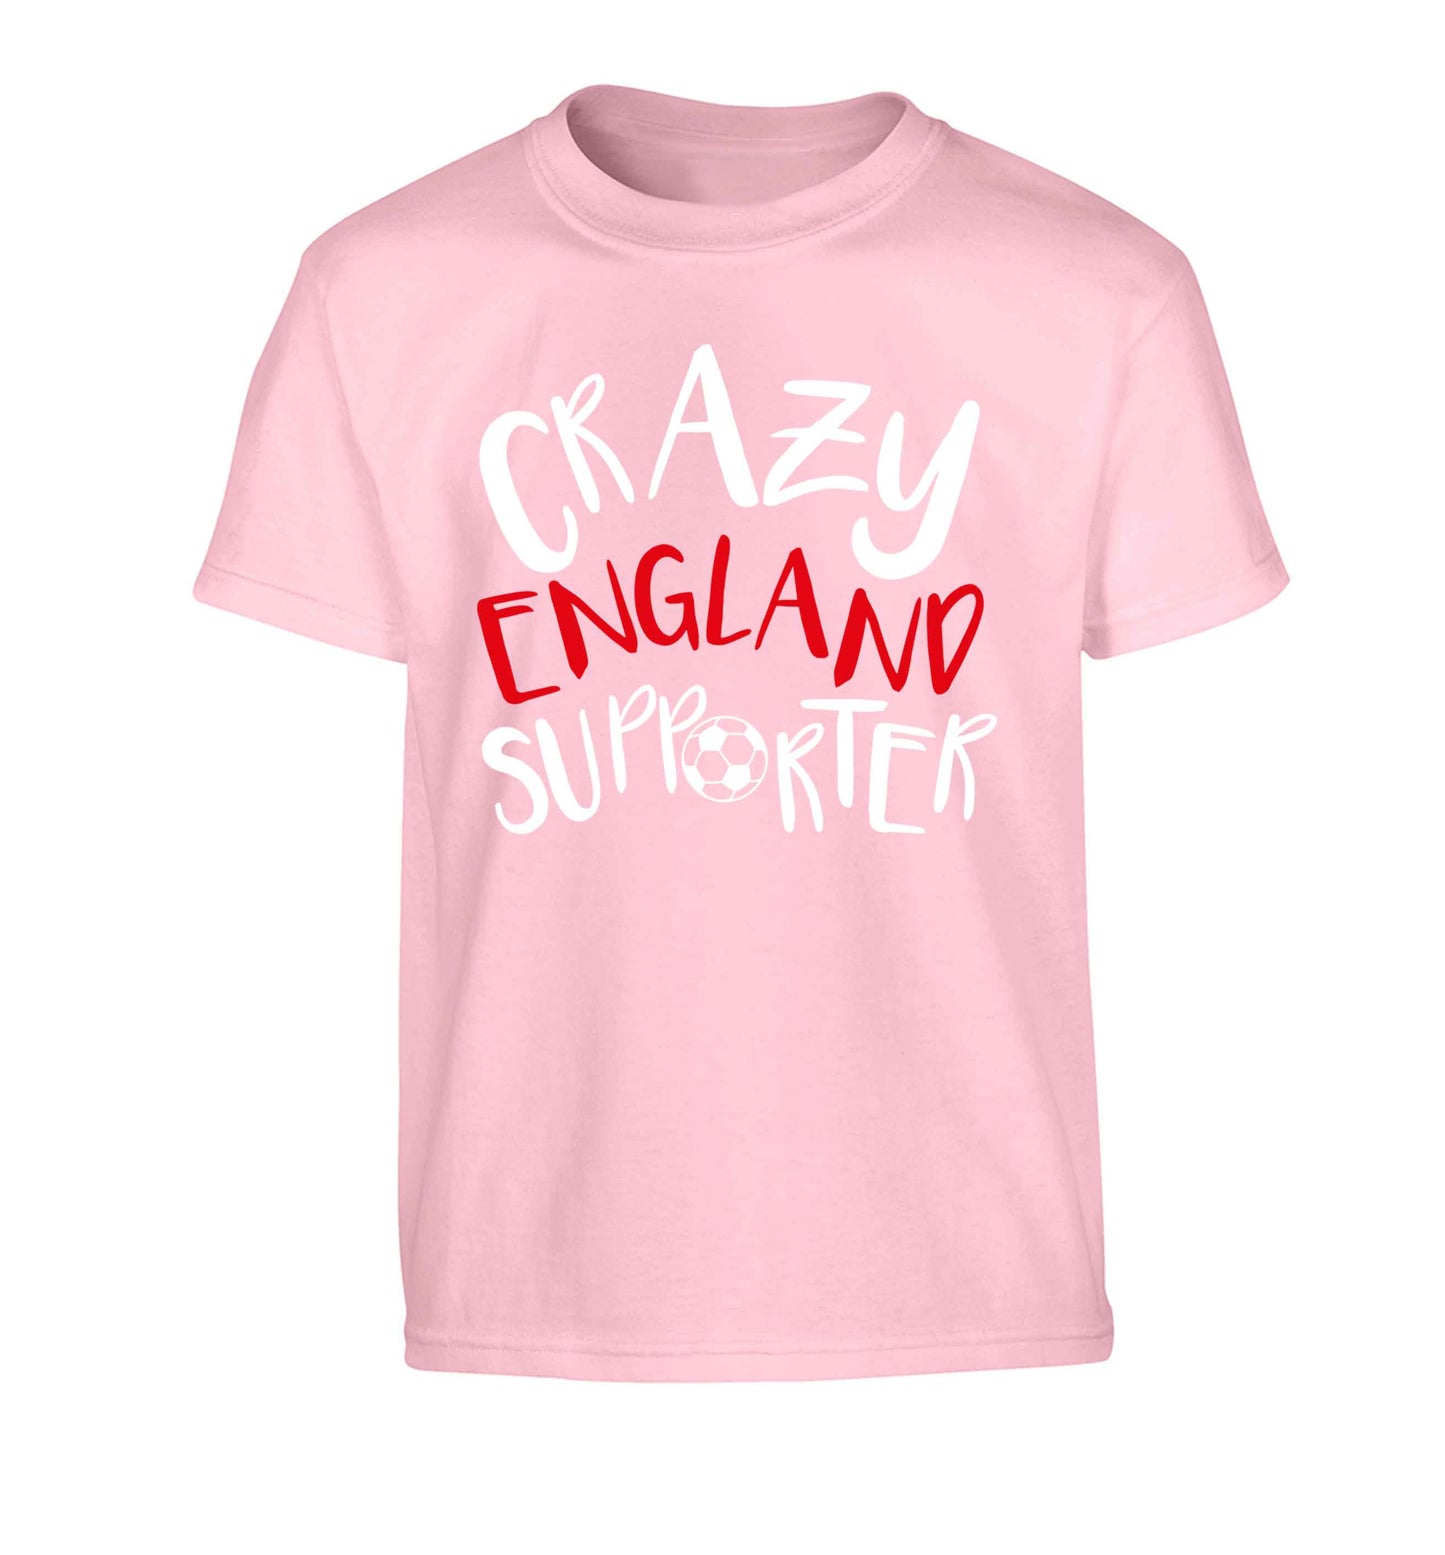 Crazy England supporter Children's light pink Tshirt 12-13 Years